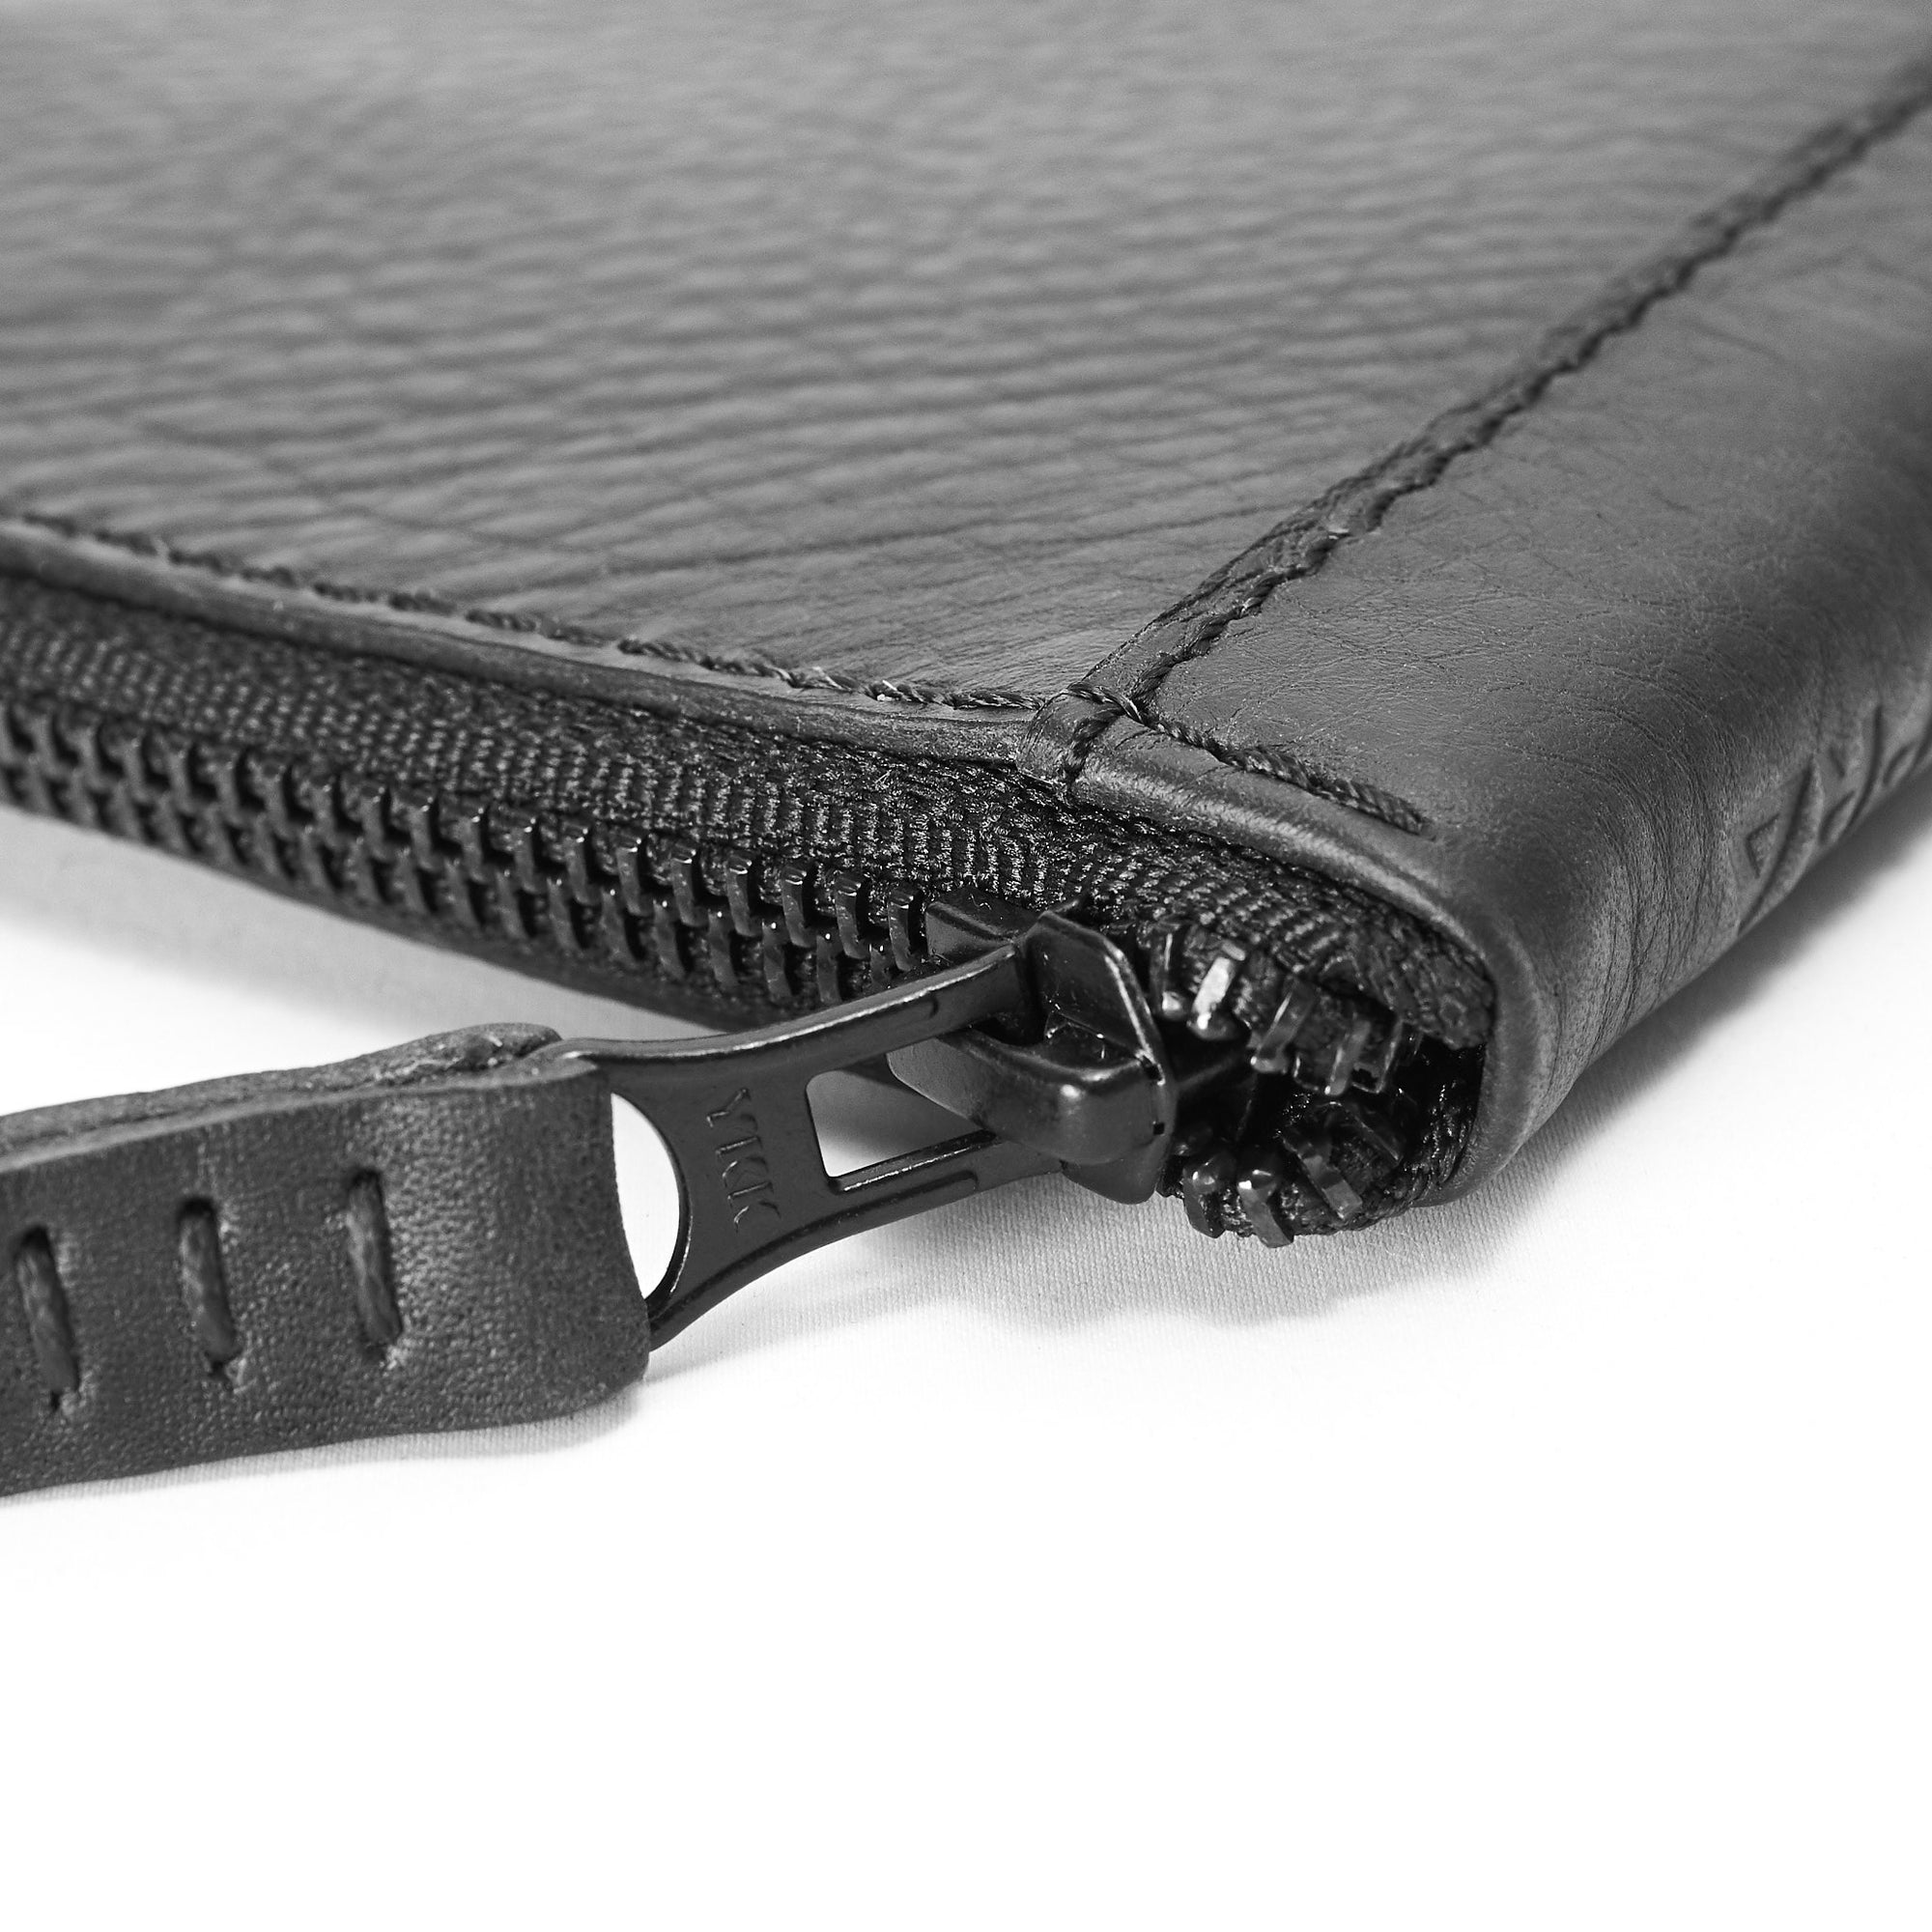 YKK zipper detail. Black Passport Holder for travelers, document organizer, travel journal by Capra Leather